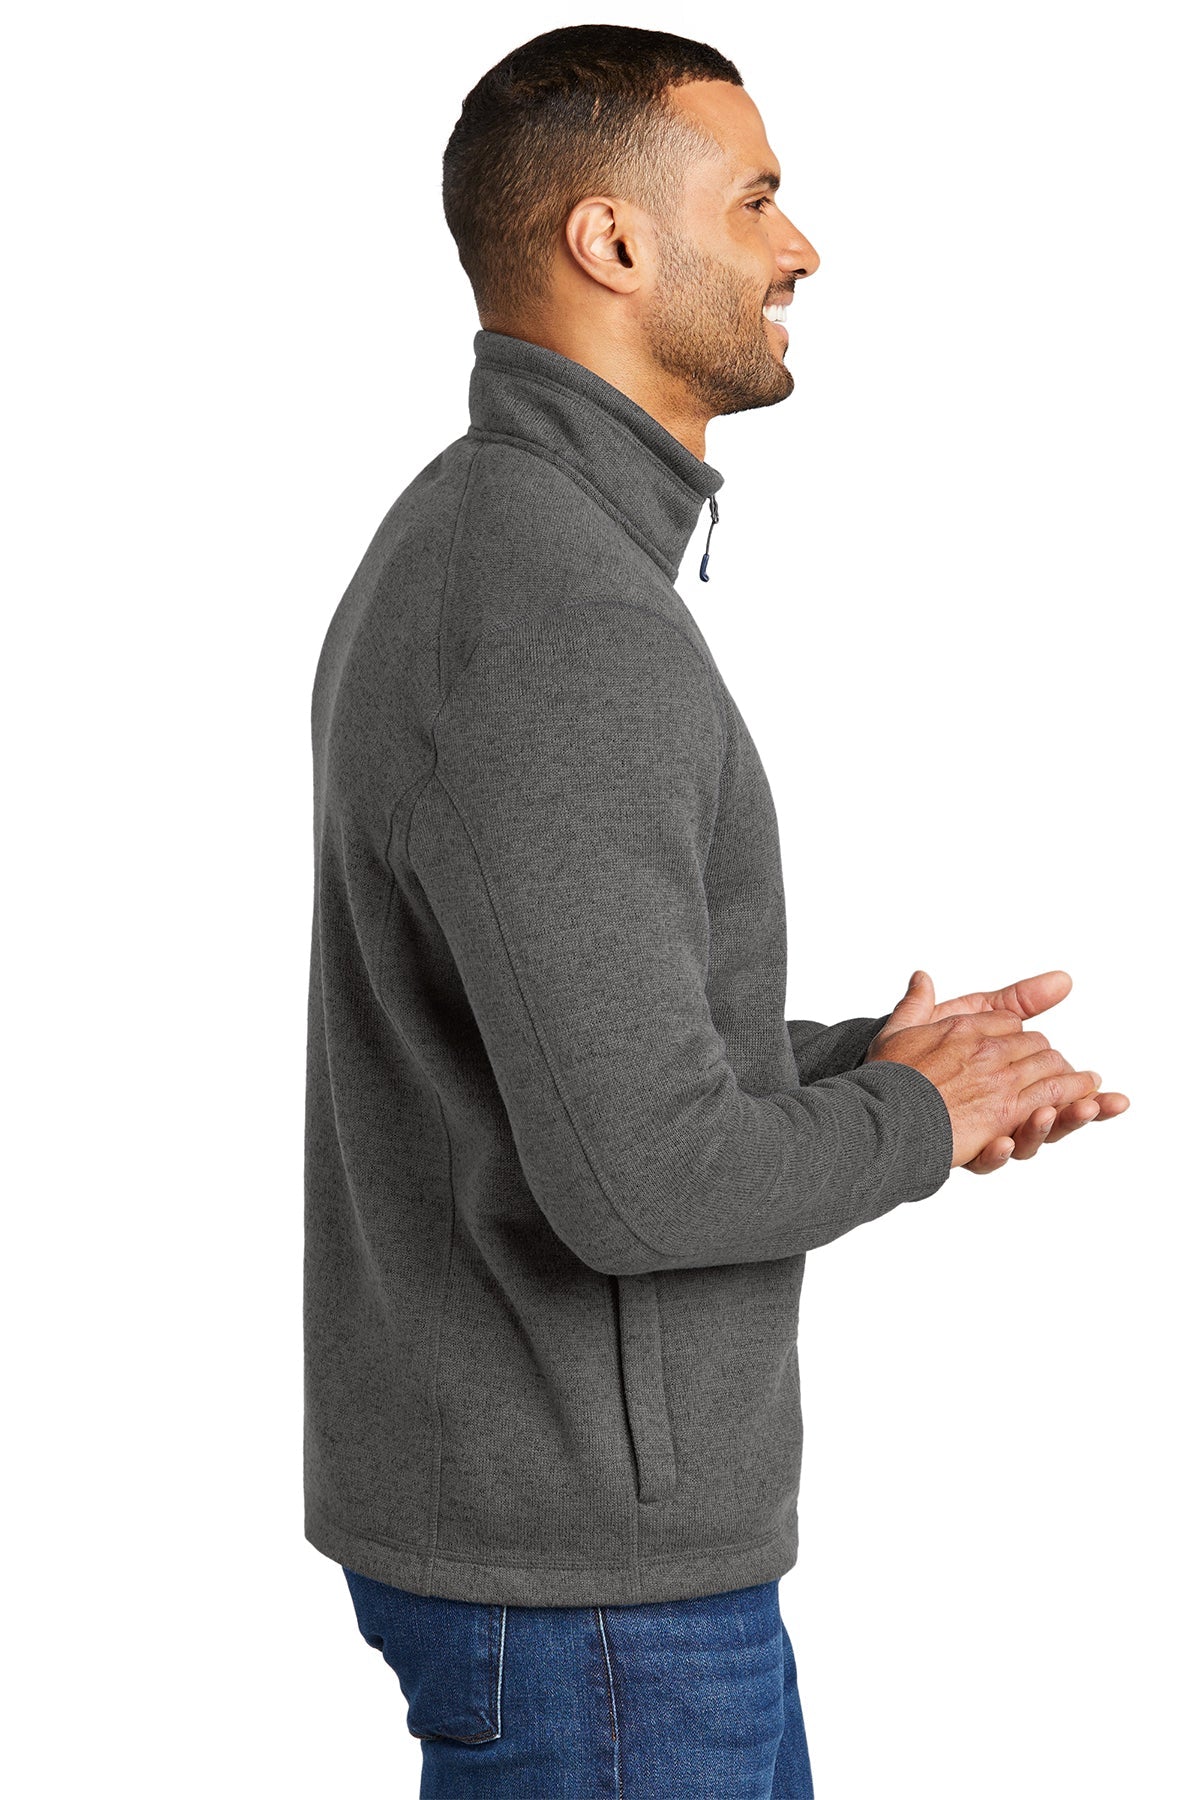 Port Authority Arc Sweater Fleece Customized 1/4-Zips, Grey Smoke Heather